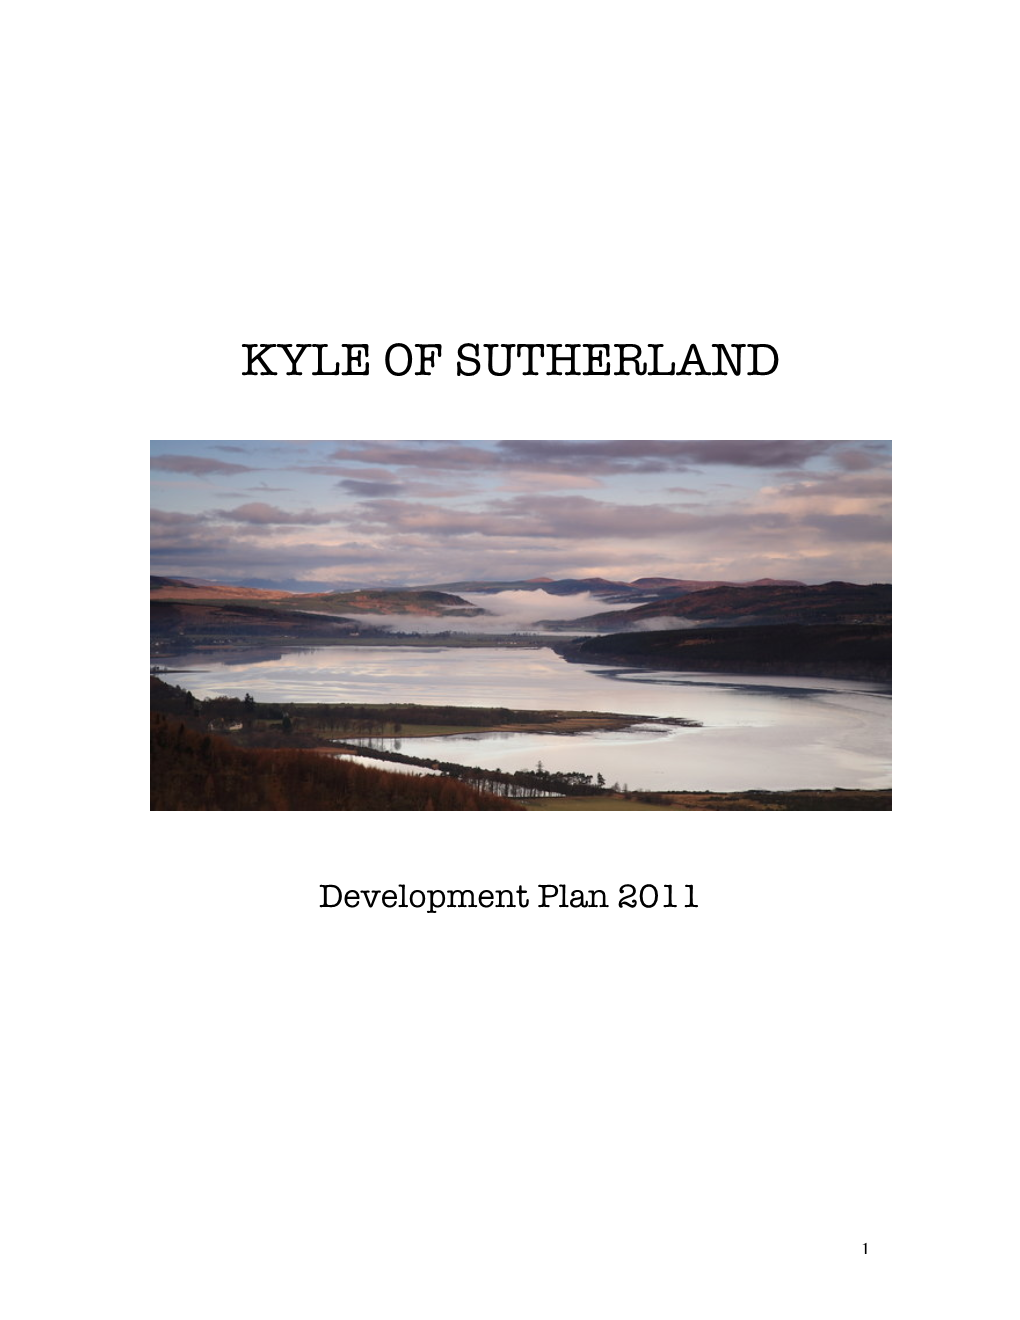 Kyle of Sutherland Development Plan